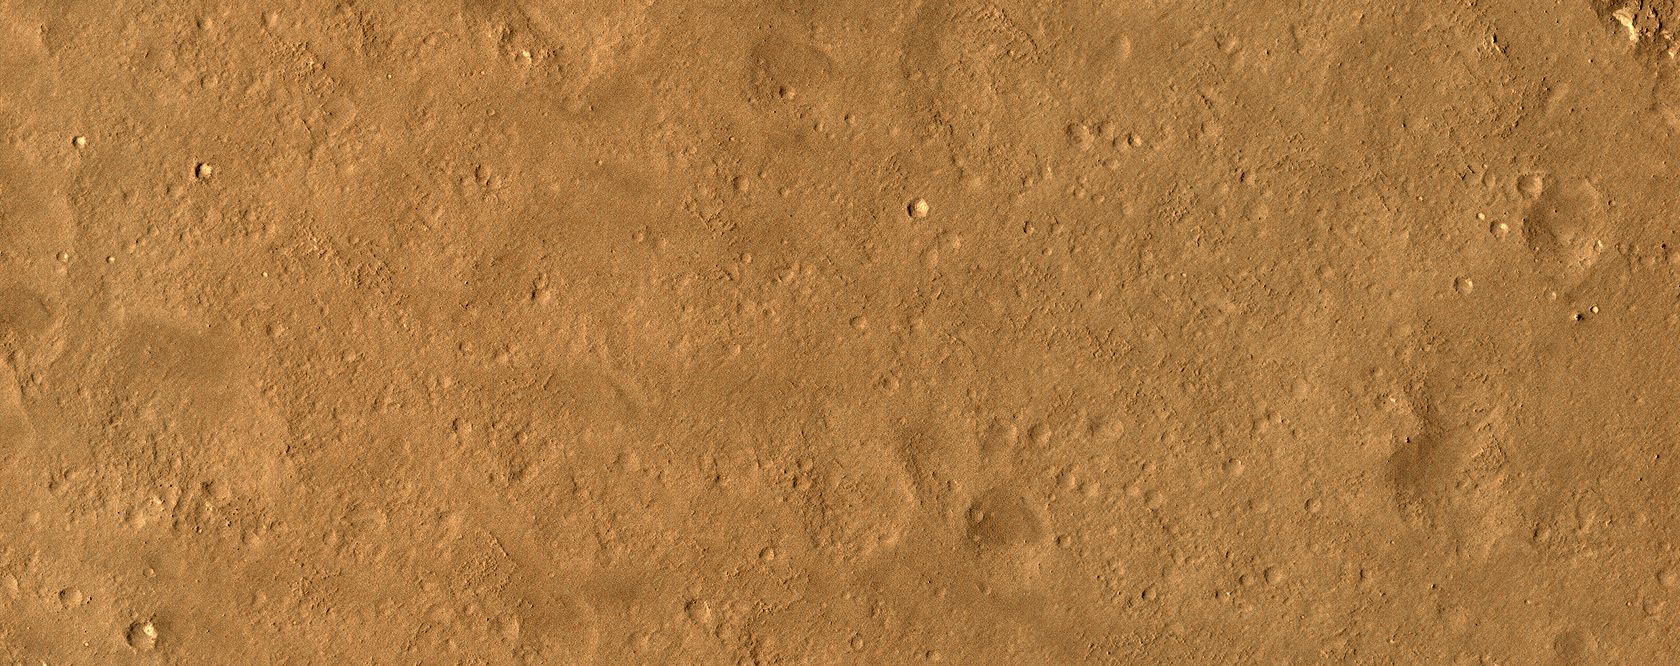 A Candidate Landing Site in Utopia Planitia